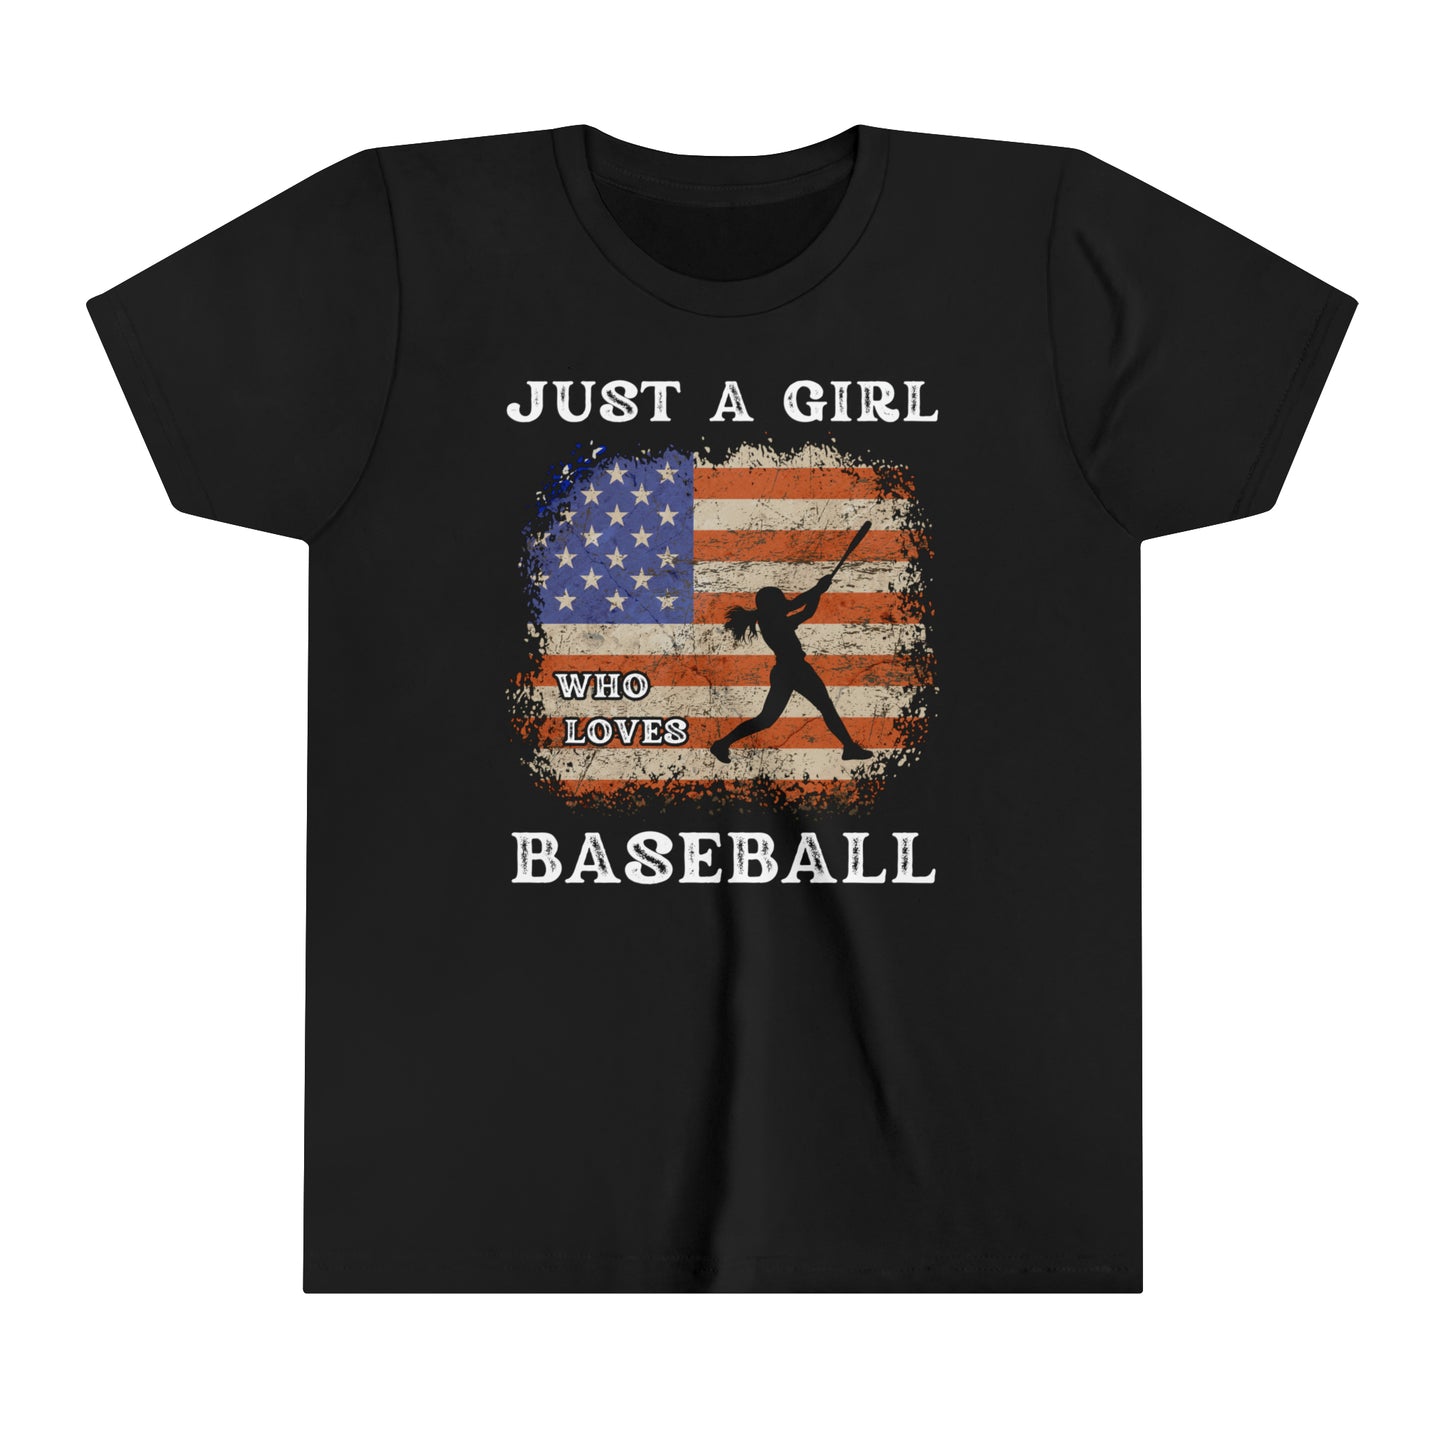 Just a Girl Who Loves Baseball - Youth Short Sleeve Tee